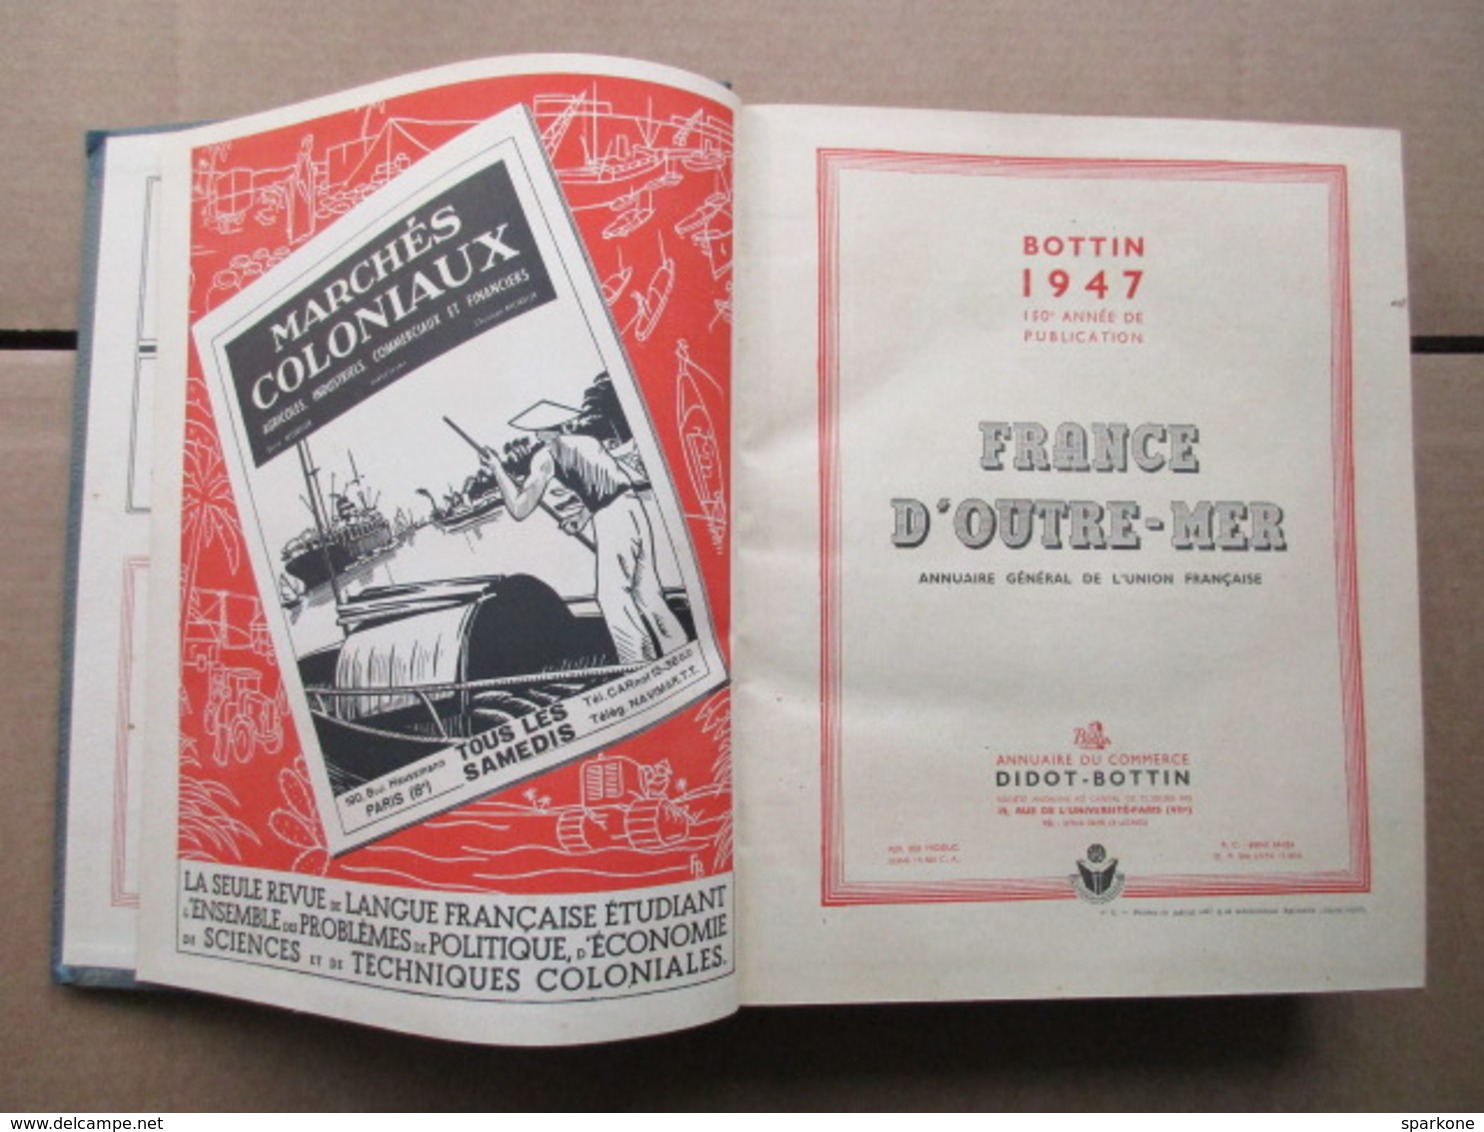 Annuaire Du Commerce / Didot-Bottin / France D'Outre-Mer De 1947 - Telefonbücher